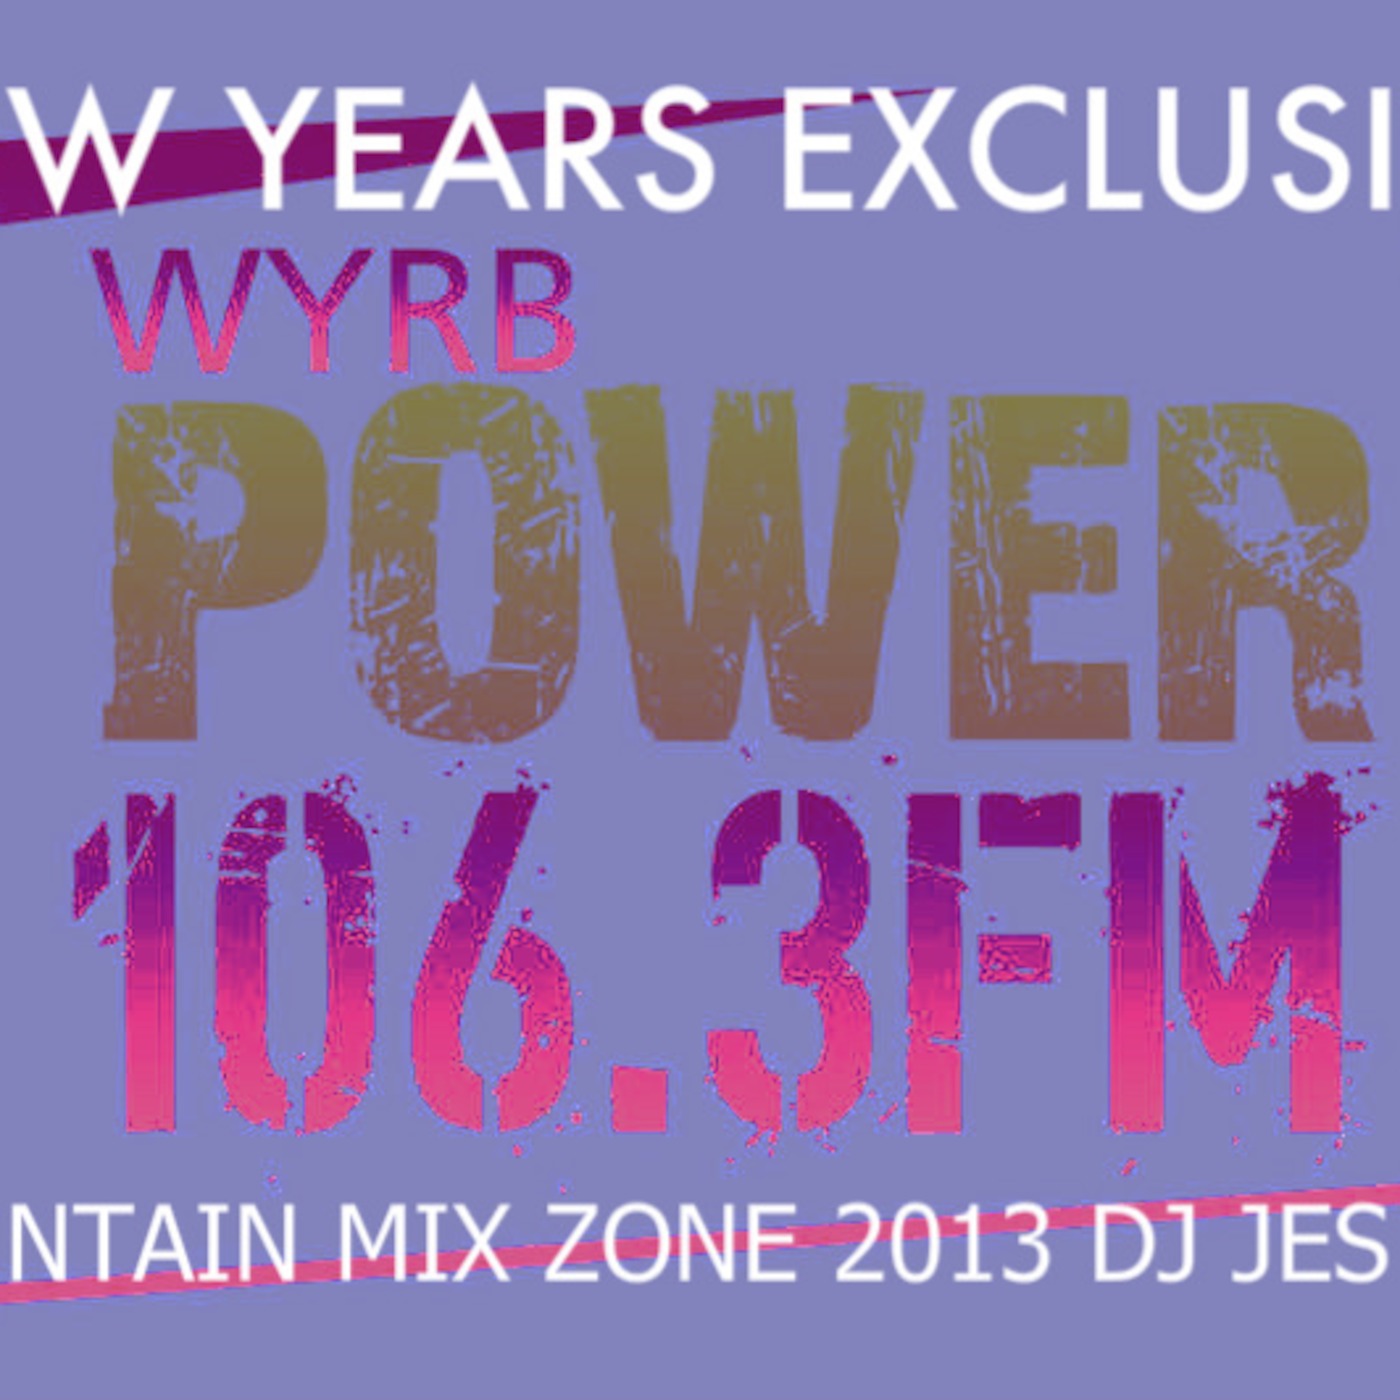 NEW YEARS EXCLUSIVE POWER 106 FM MOUNTAIN  MIX ZONE - DJ JES ONE 3/4 MIX